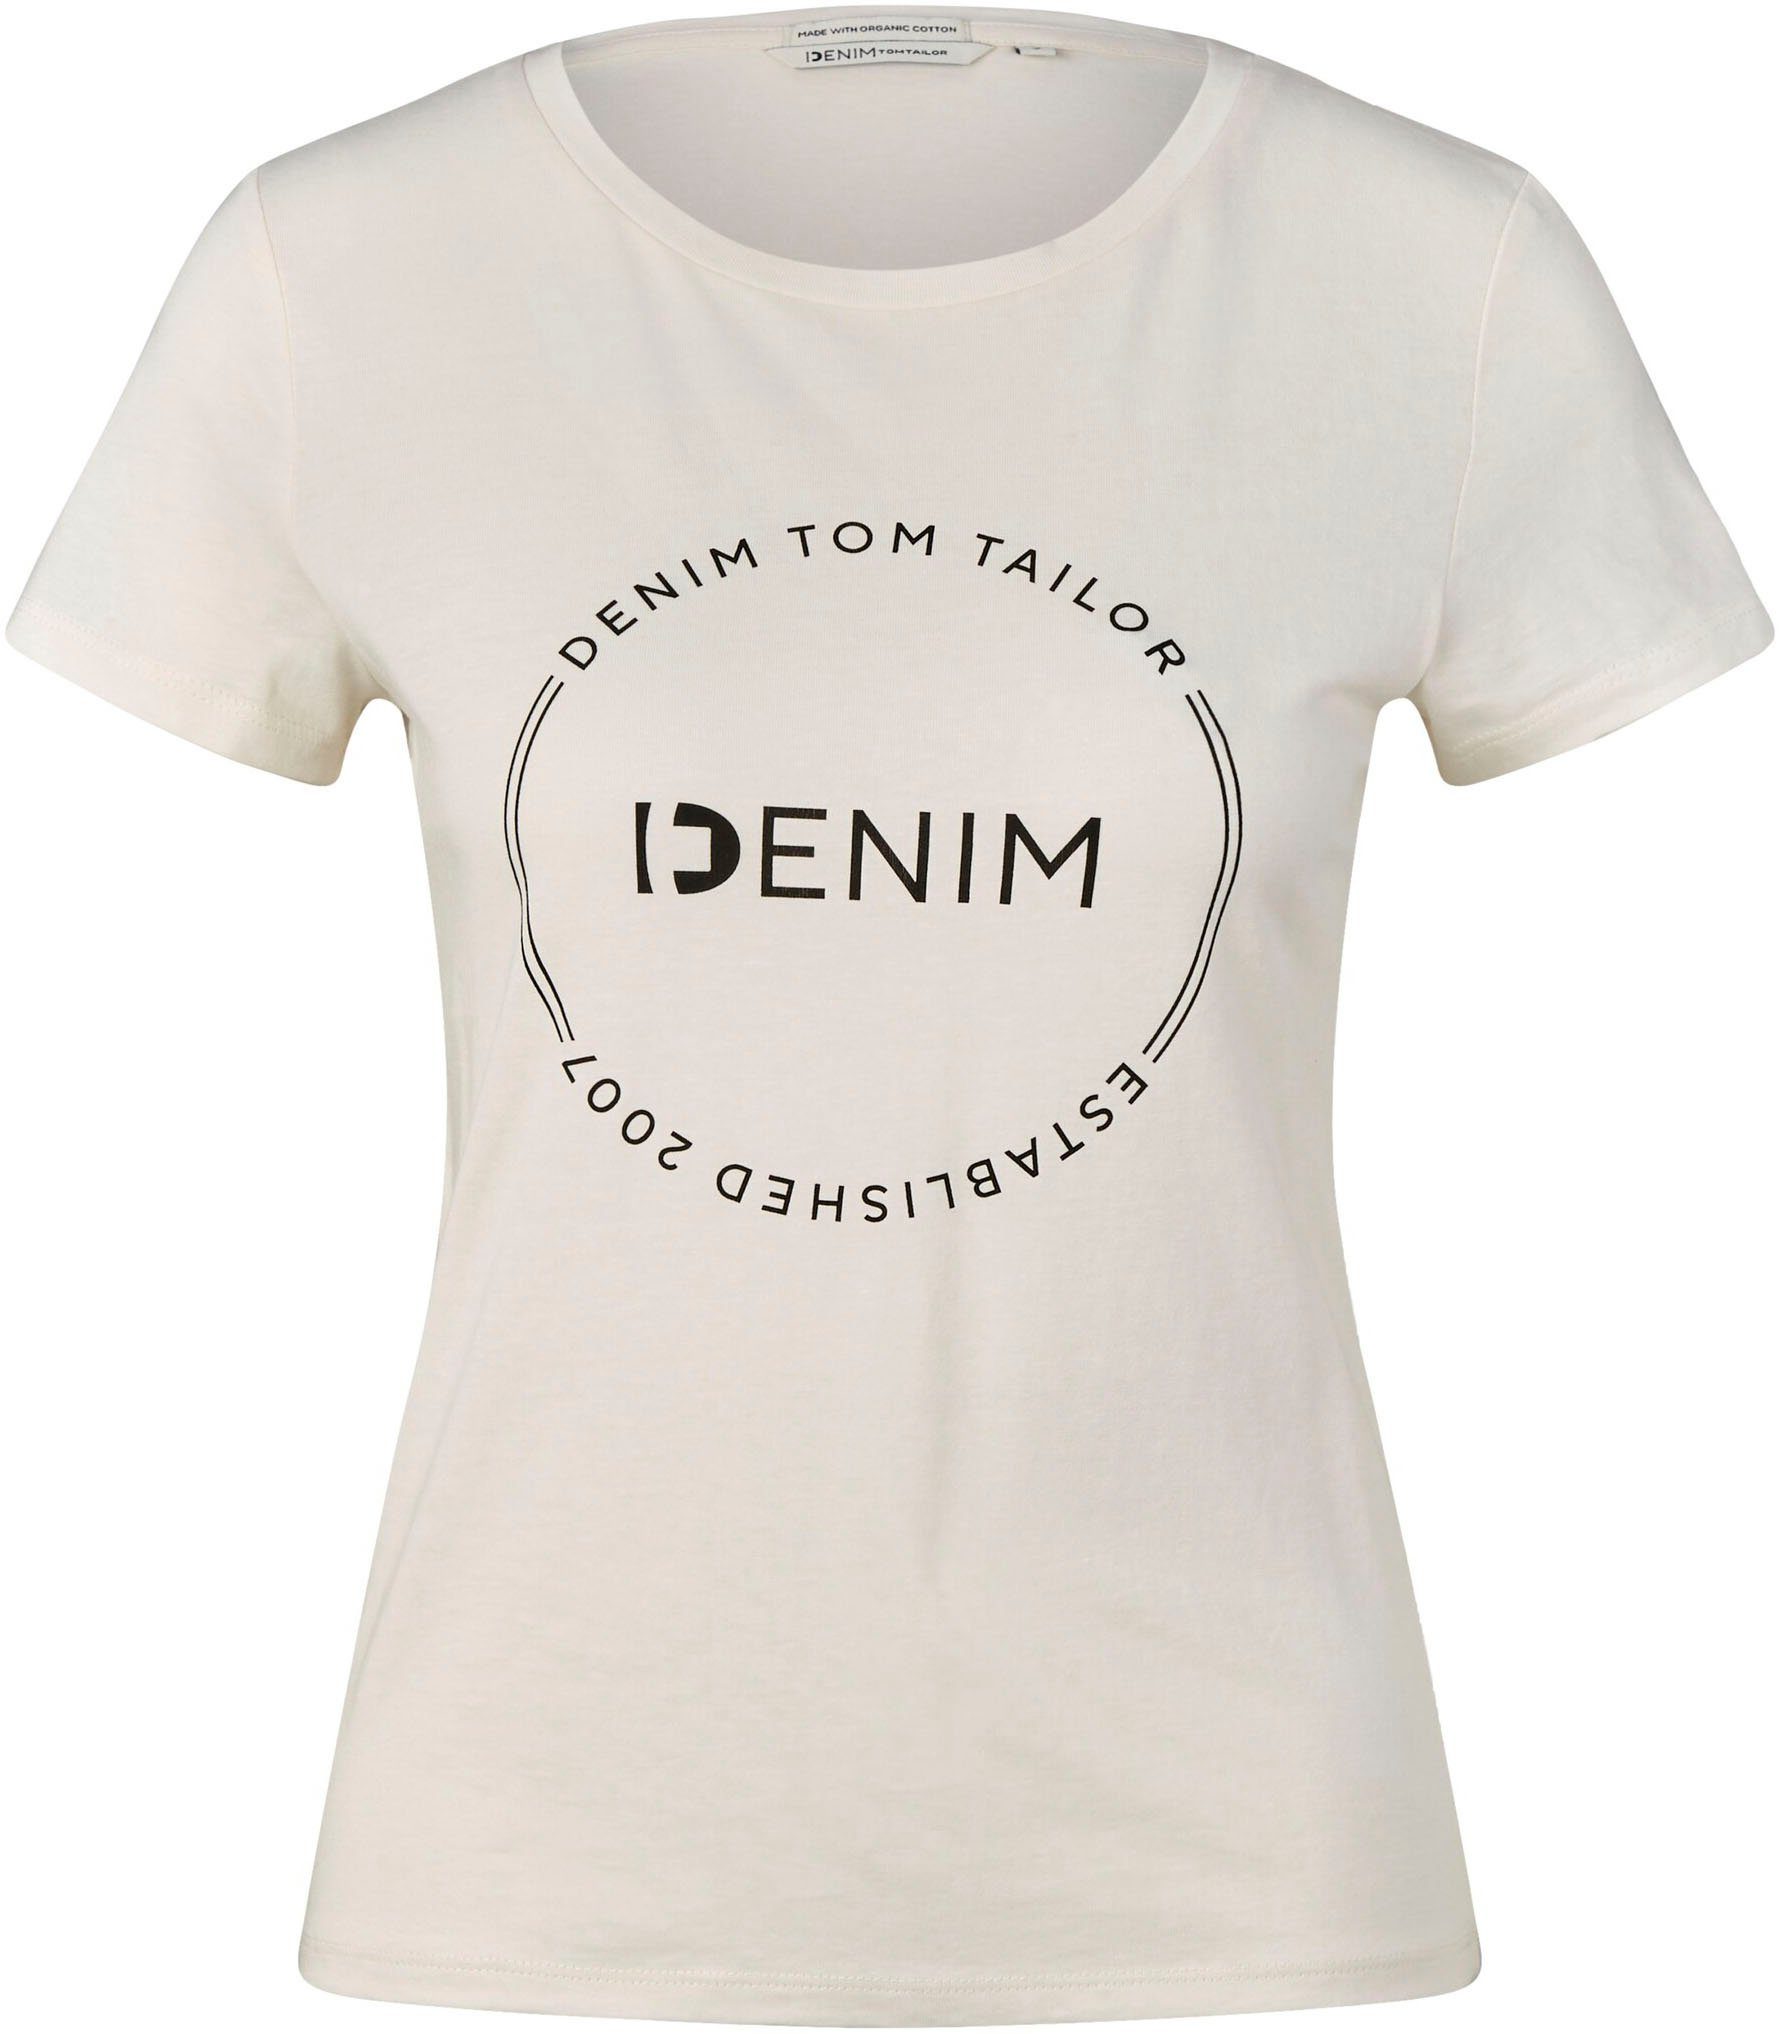 TOM TAILOR Denim T-Shirt weiß